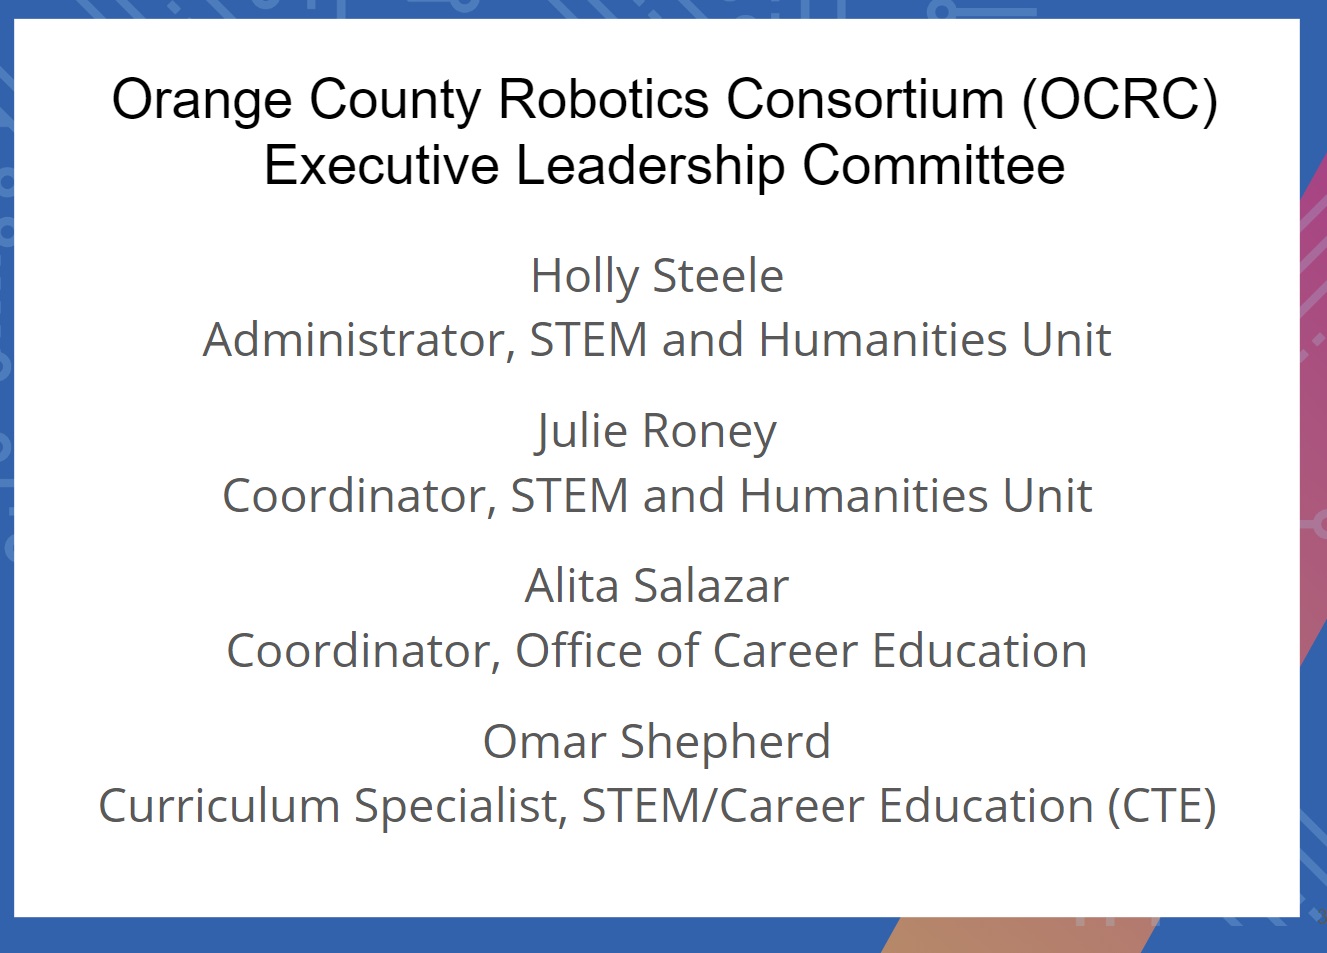 OCRC Executive Leadership Team.jpg